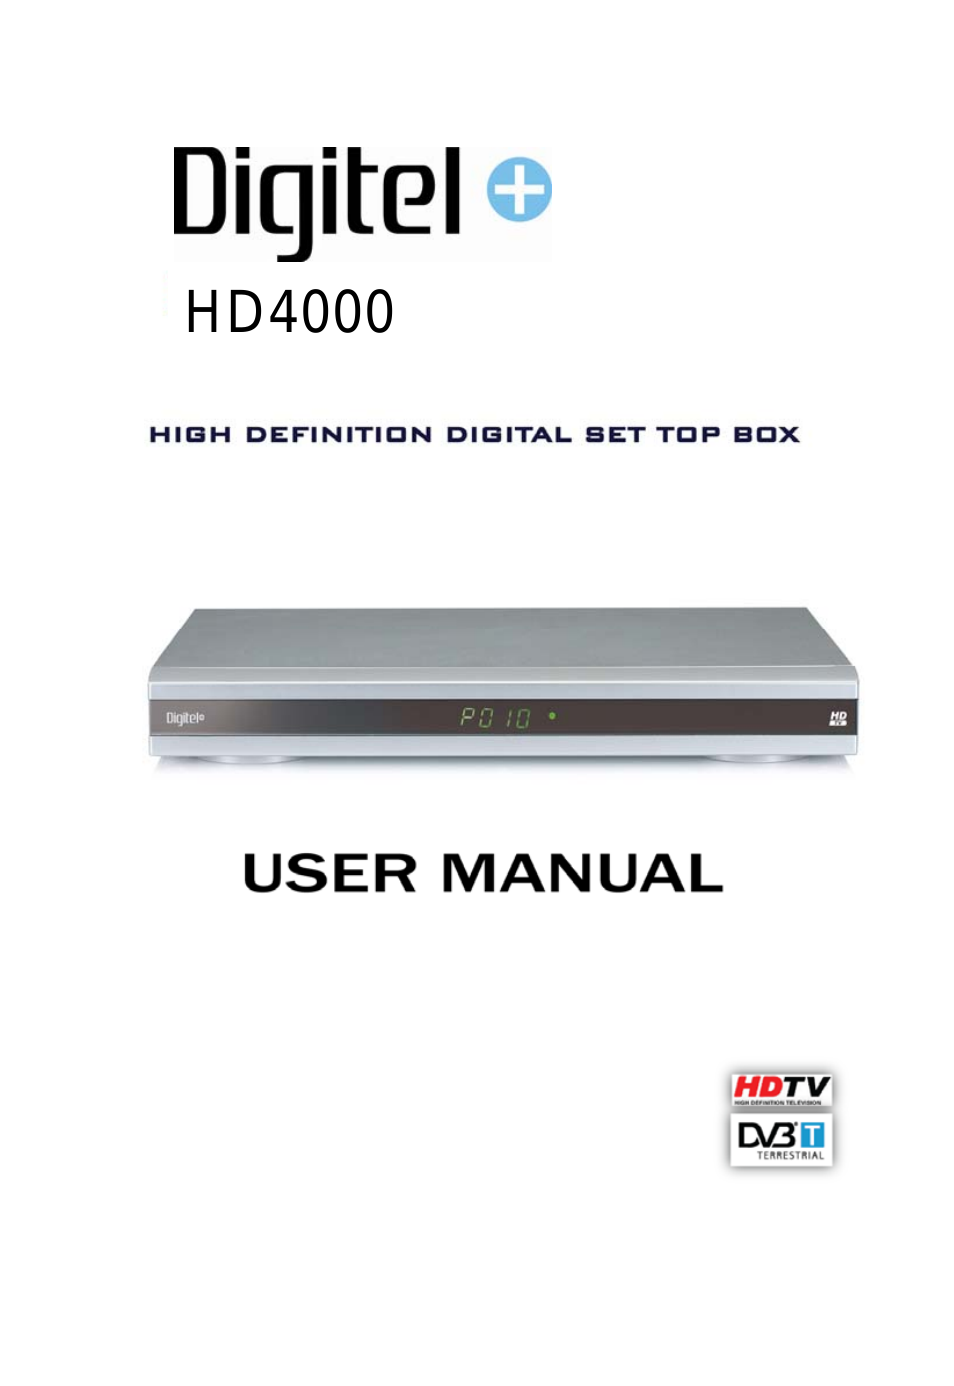 High Definition Digital Set Top Box HD4000